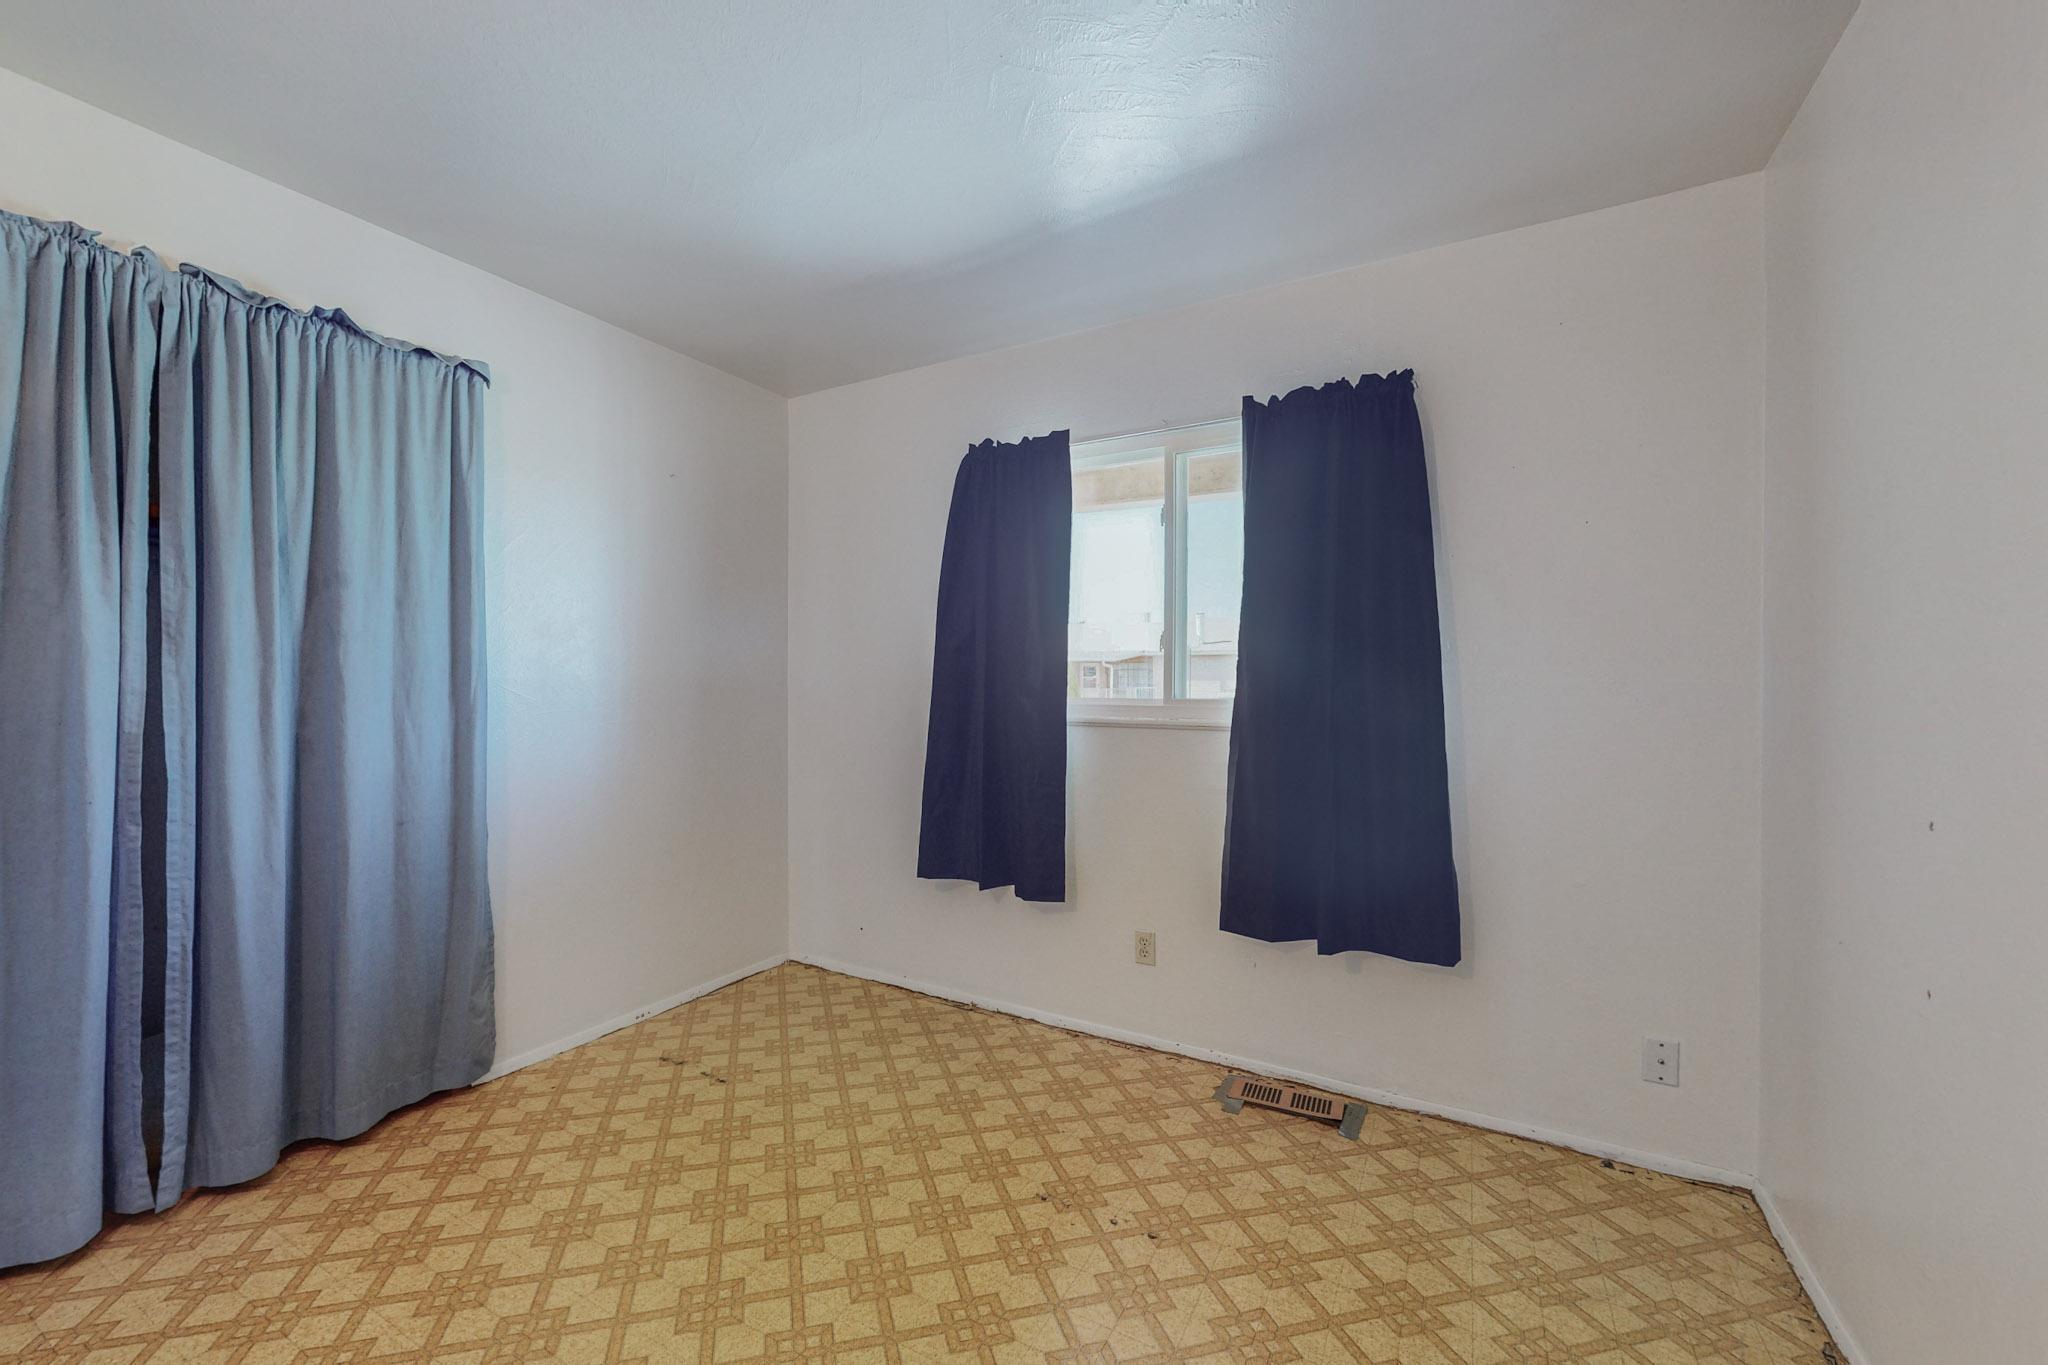 825 Jackson Avenue, Grants, New Mexico 87020, 3 Bedrooms Bedrooms, ,2 BathroomsBathrooms,Residential,For Sale,825 Jackson Avenue,1060981